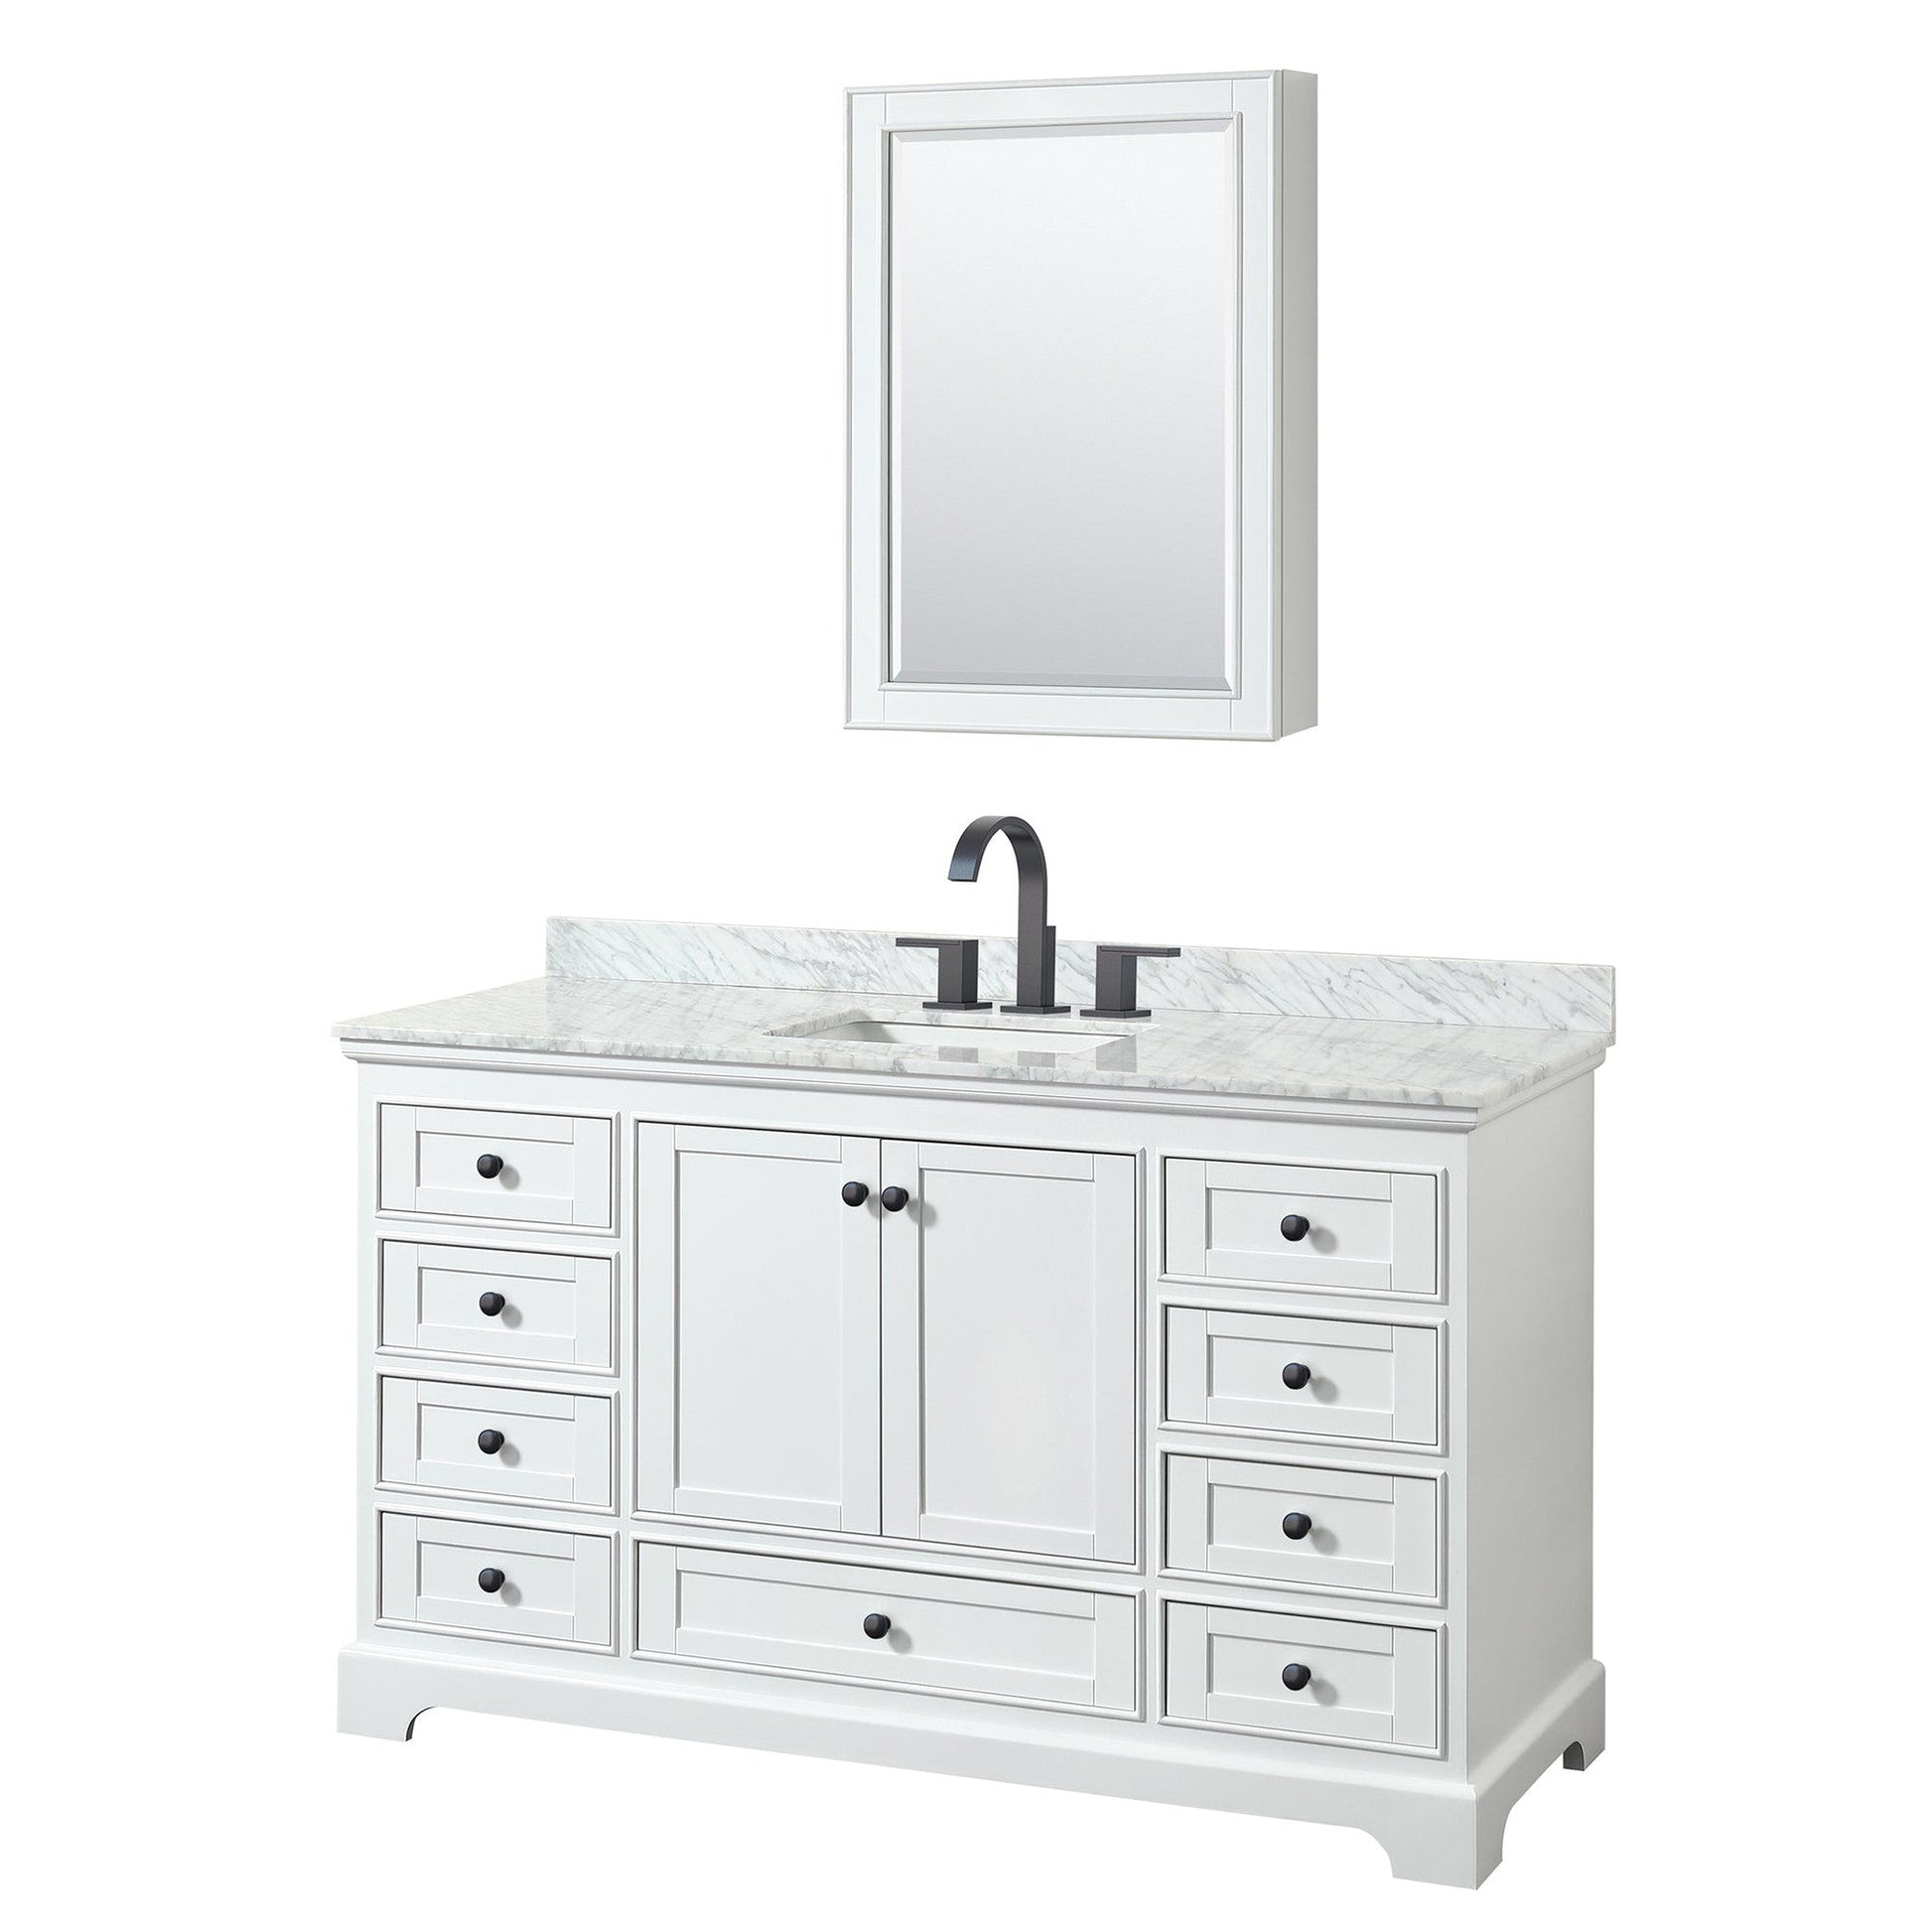 Deborah 60" Single Bathroom Vanity in White, White Carrara Marble Countertop, Undermount Square Sink, Matte Black Trim, Medicine Cabinet